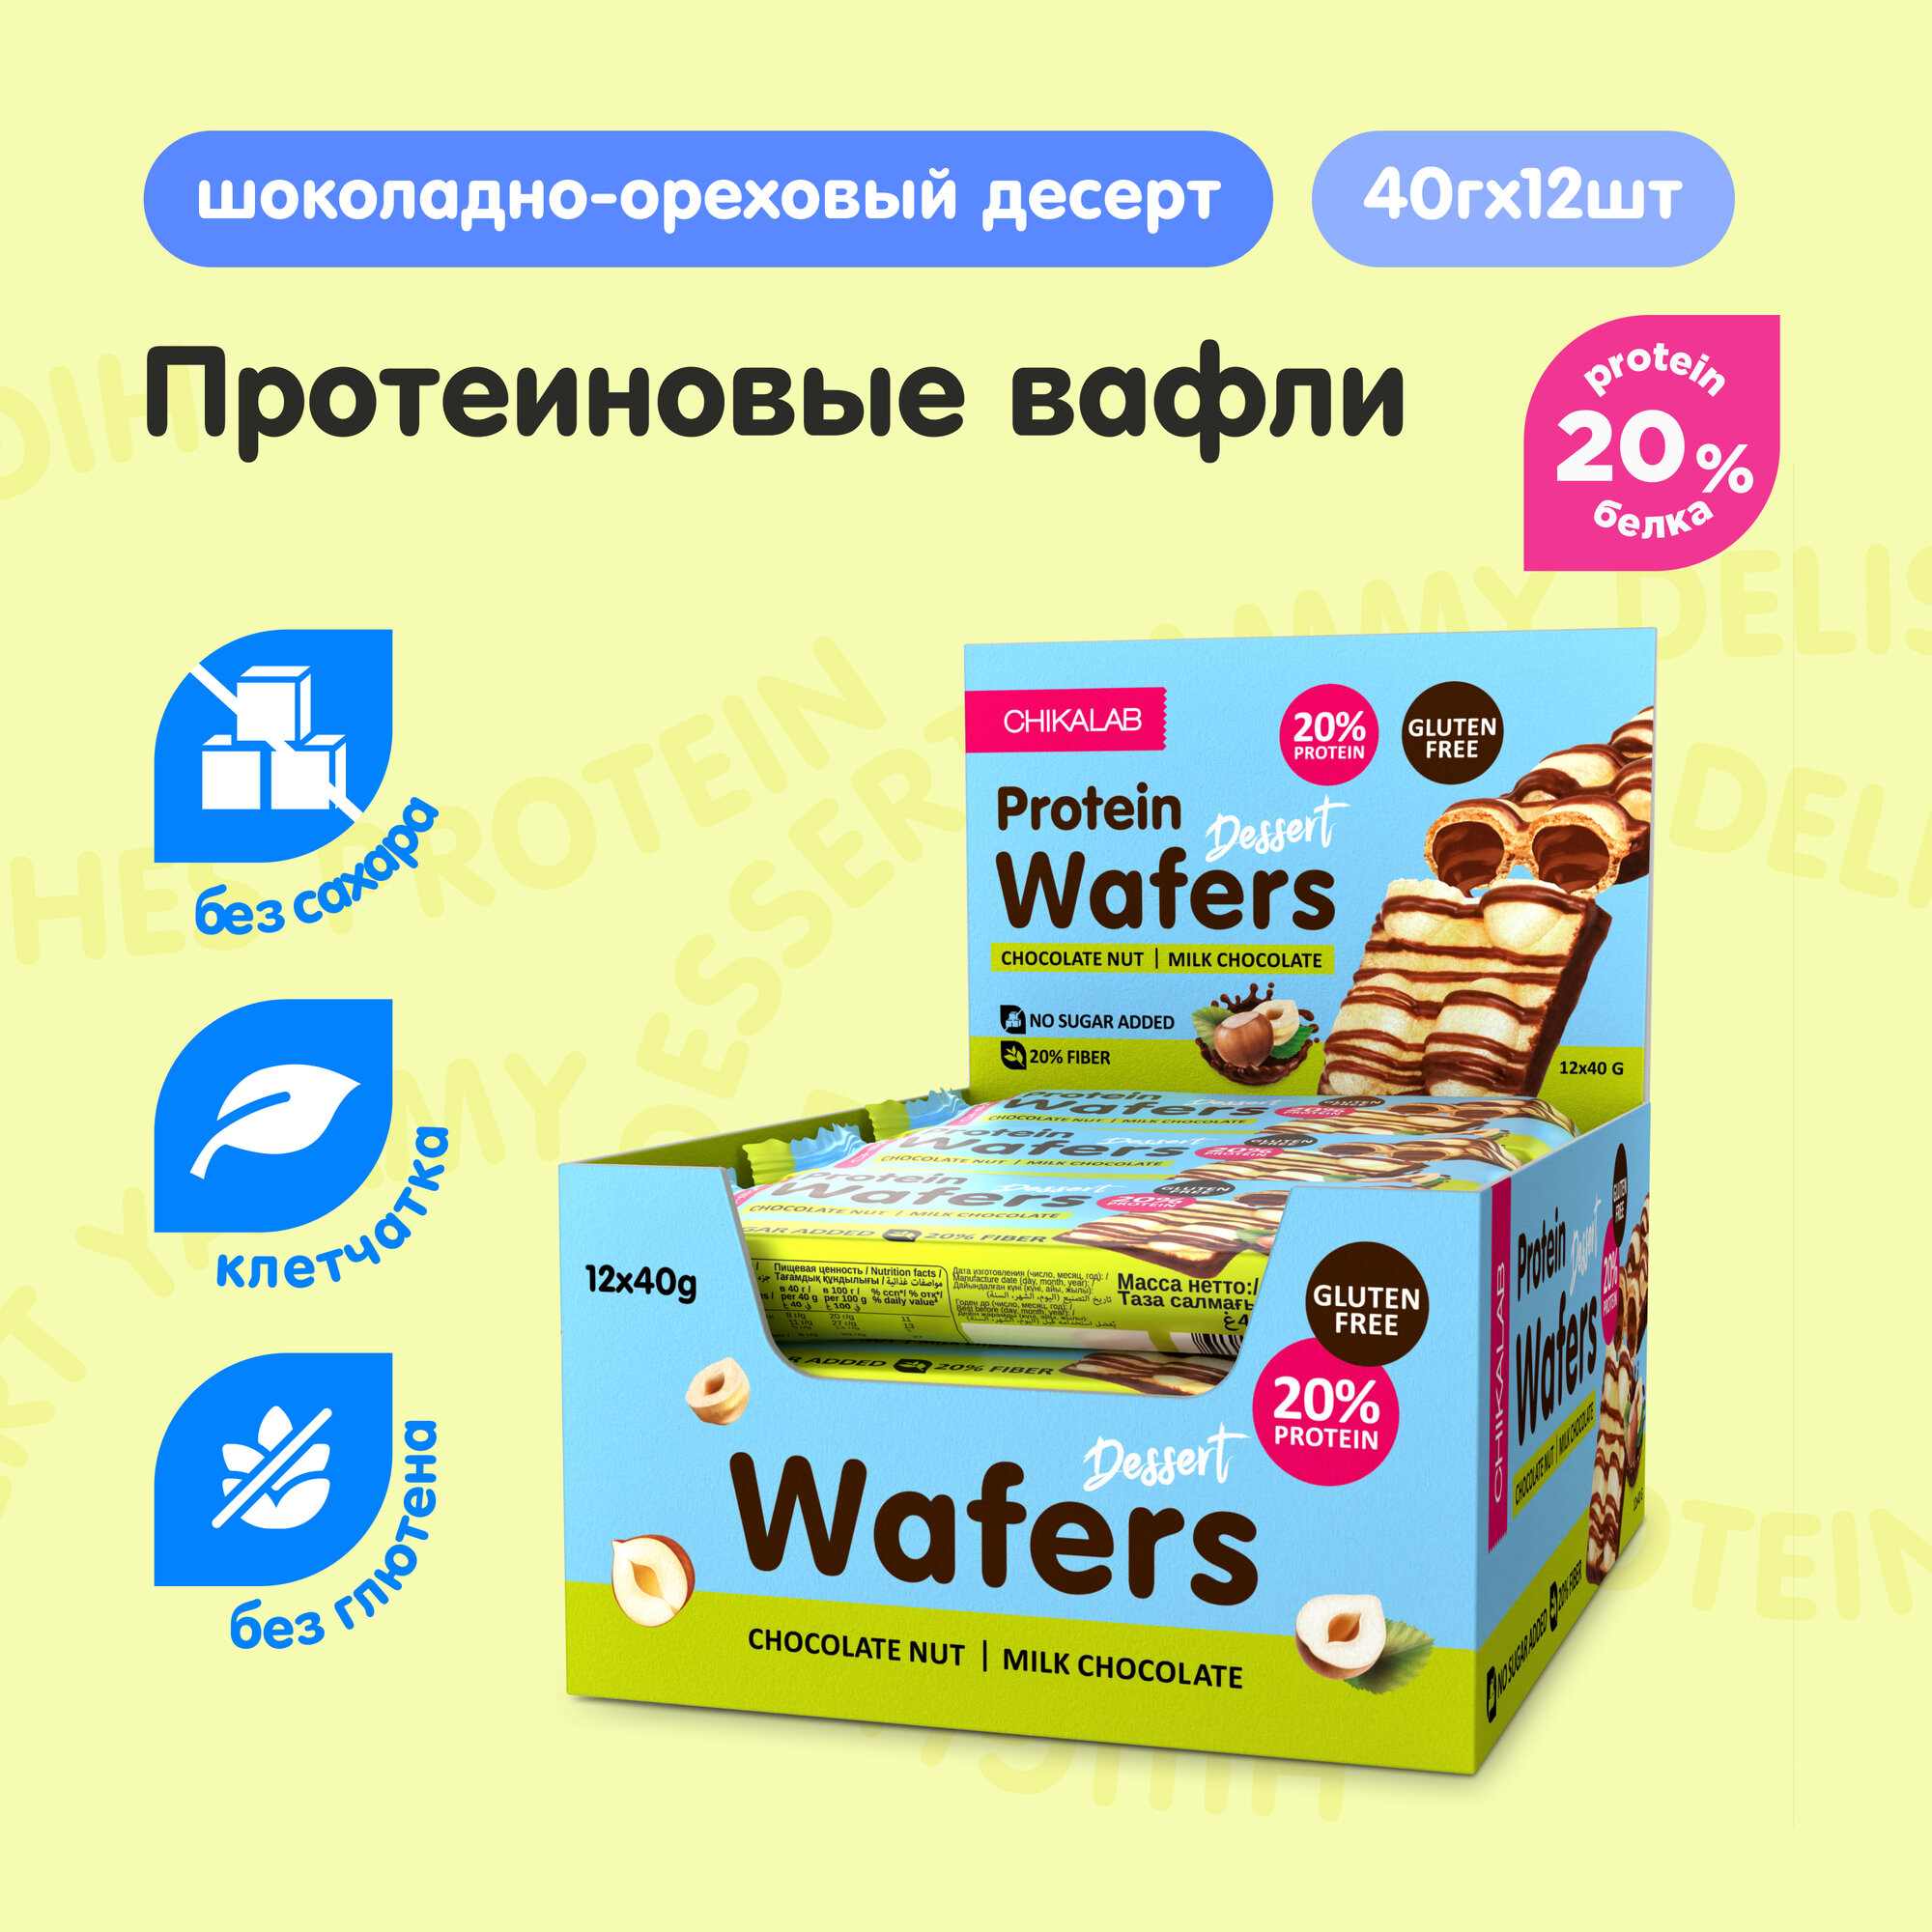 Protein Wafers Протеиновые батончики CHIKALAB - вафли без сахара, без глютена, 12шт х 40г